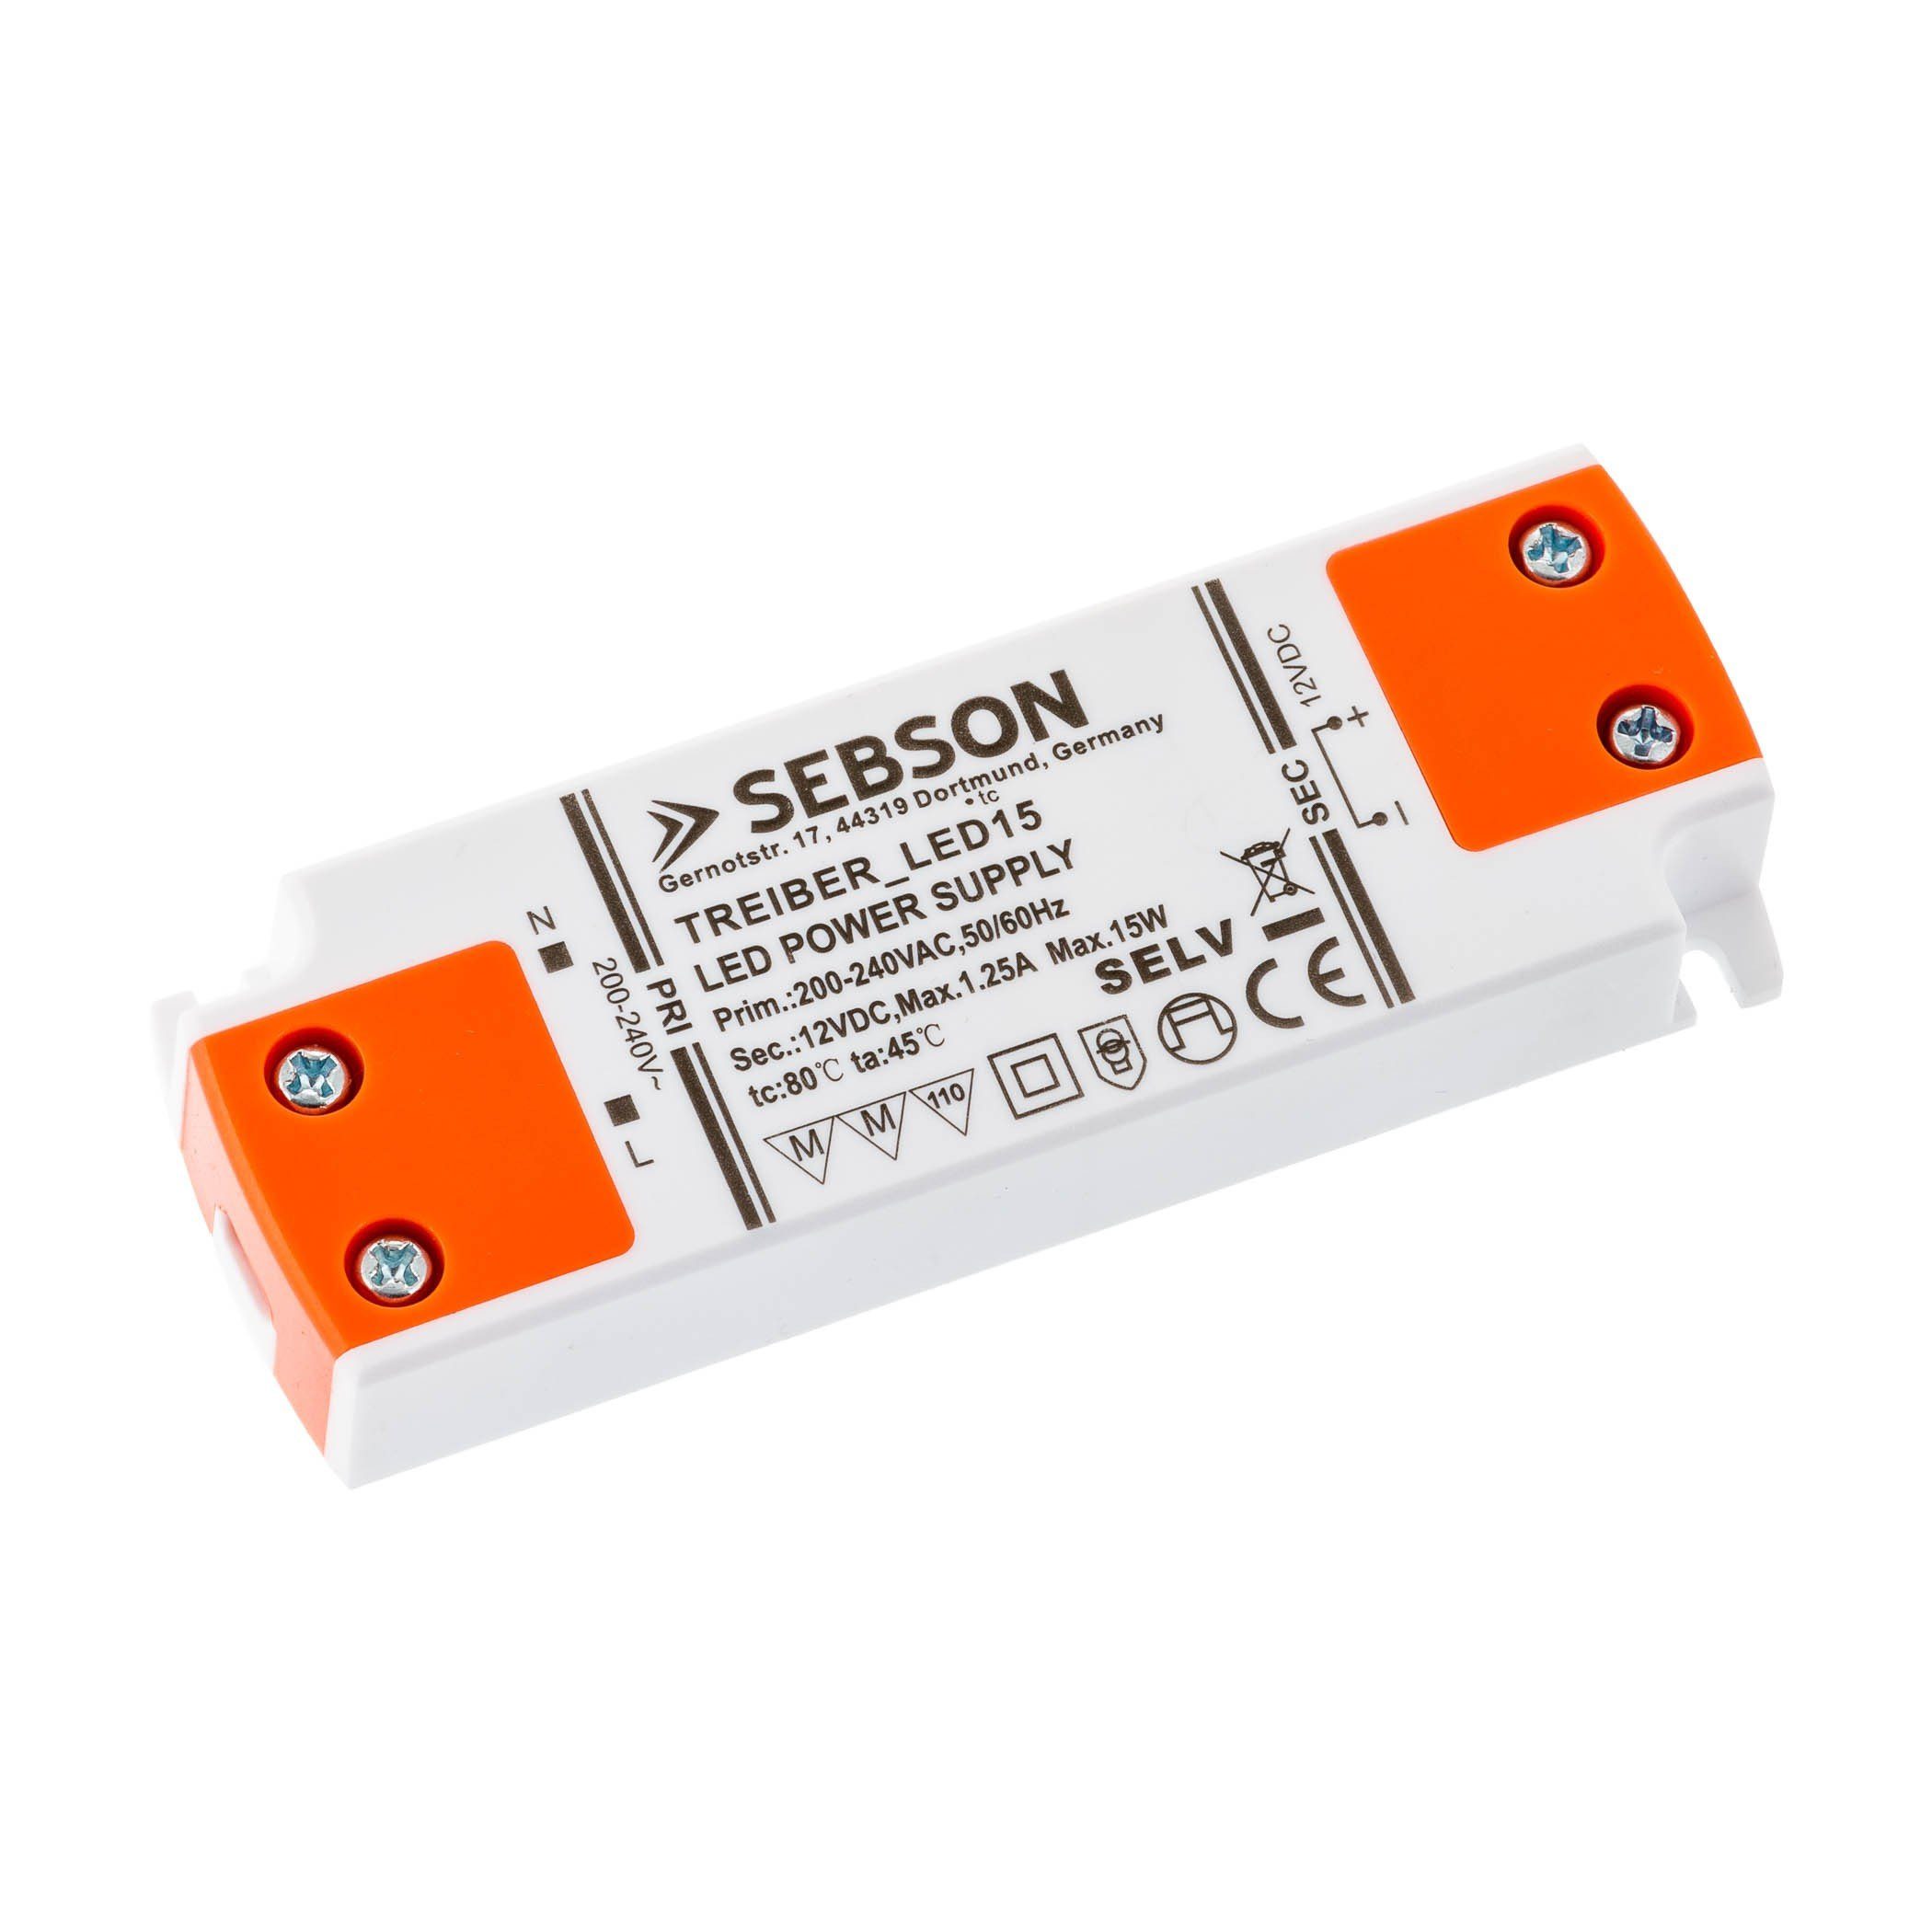 SEBSON 15W LED Treiber / LED Trafo 102x35x16mm - 12V Konstante  Ausgangsspannung, Transformator, Netzteil für LED Lampen G4, MR11, GU5.3,  MR16 Trafo